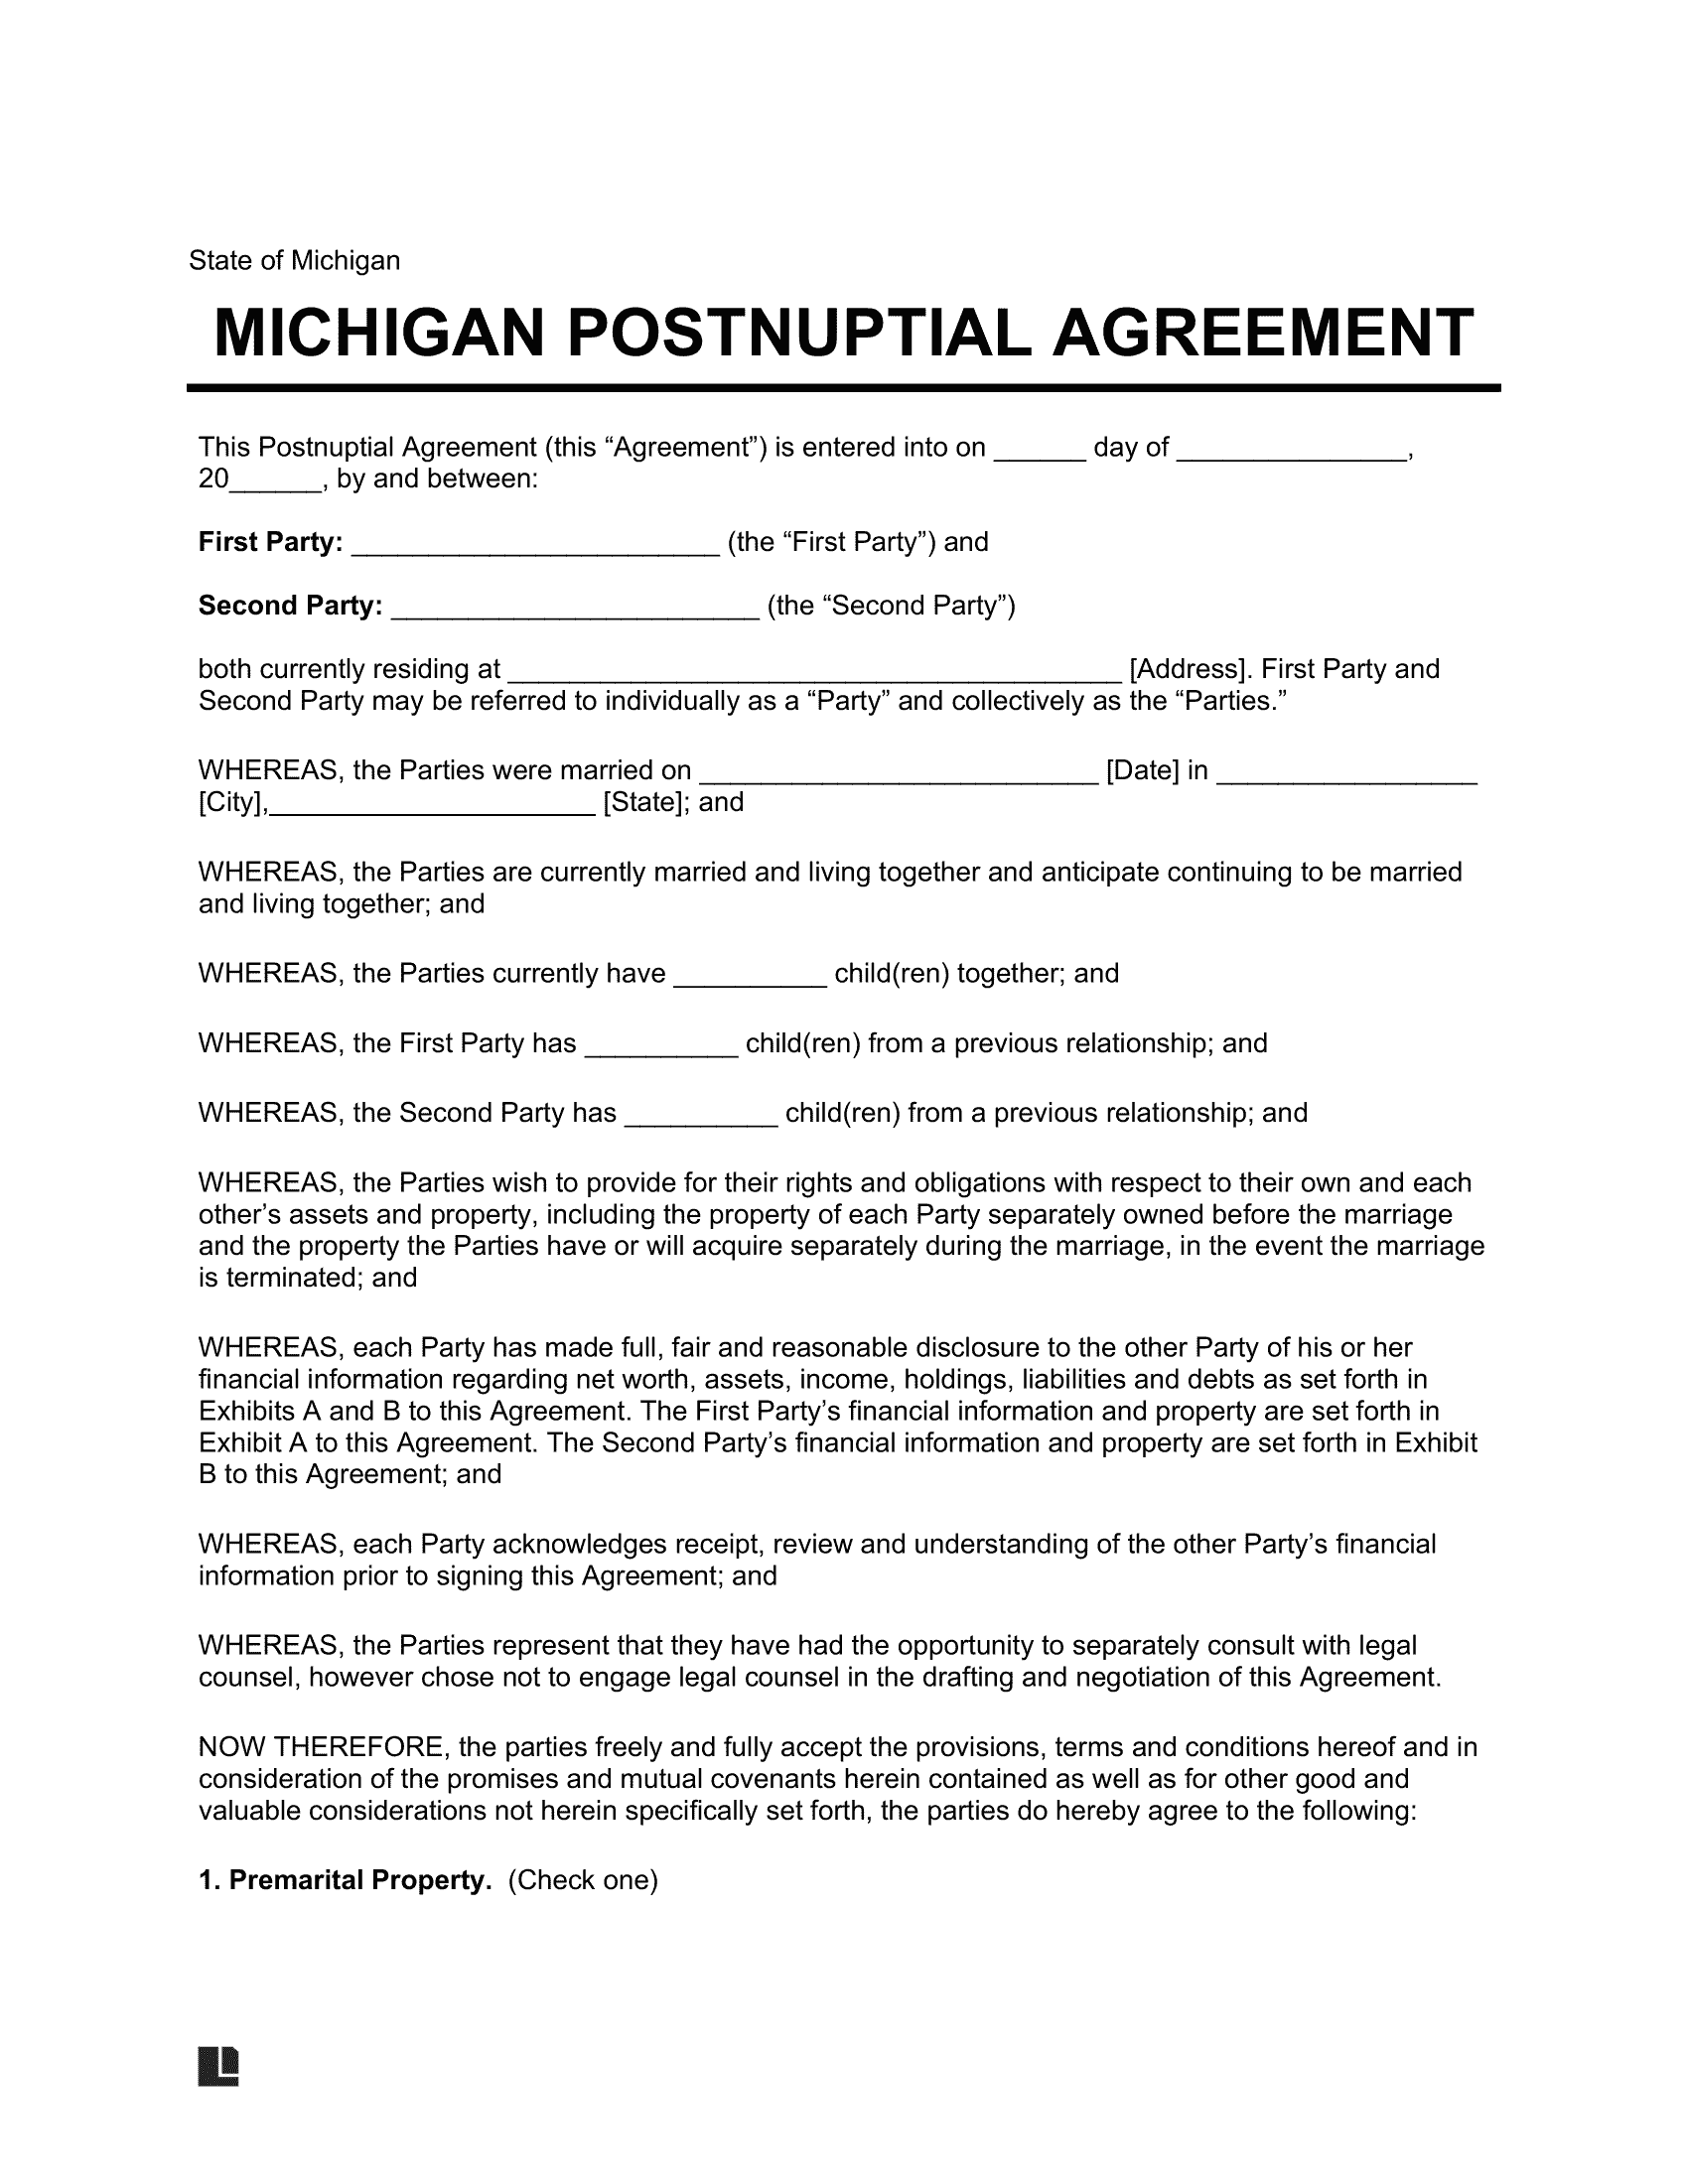 Michigan Postnuptial Agreement Template